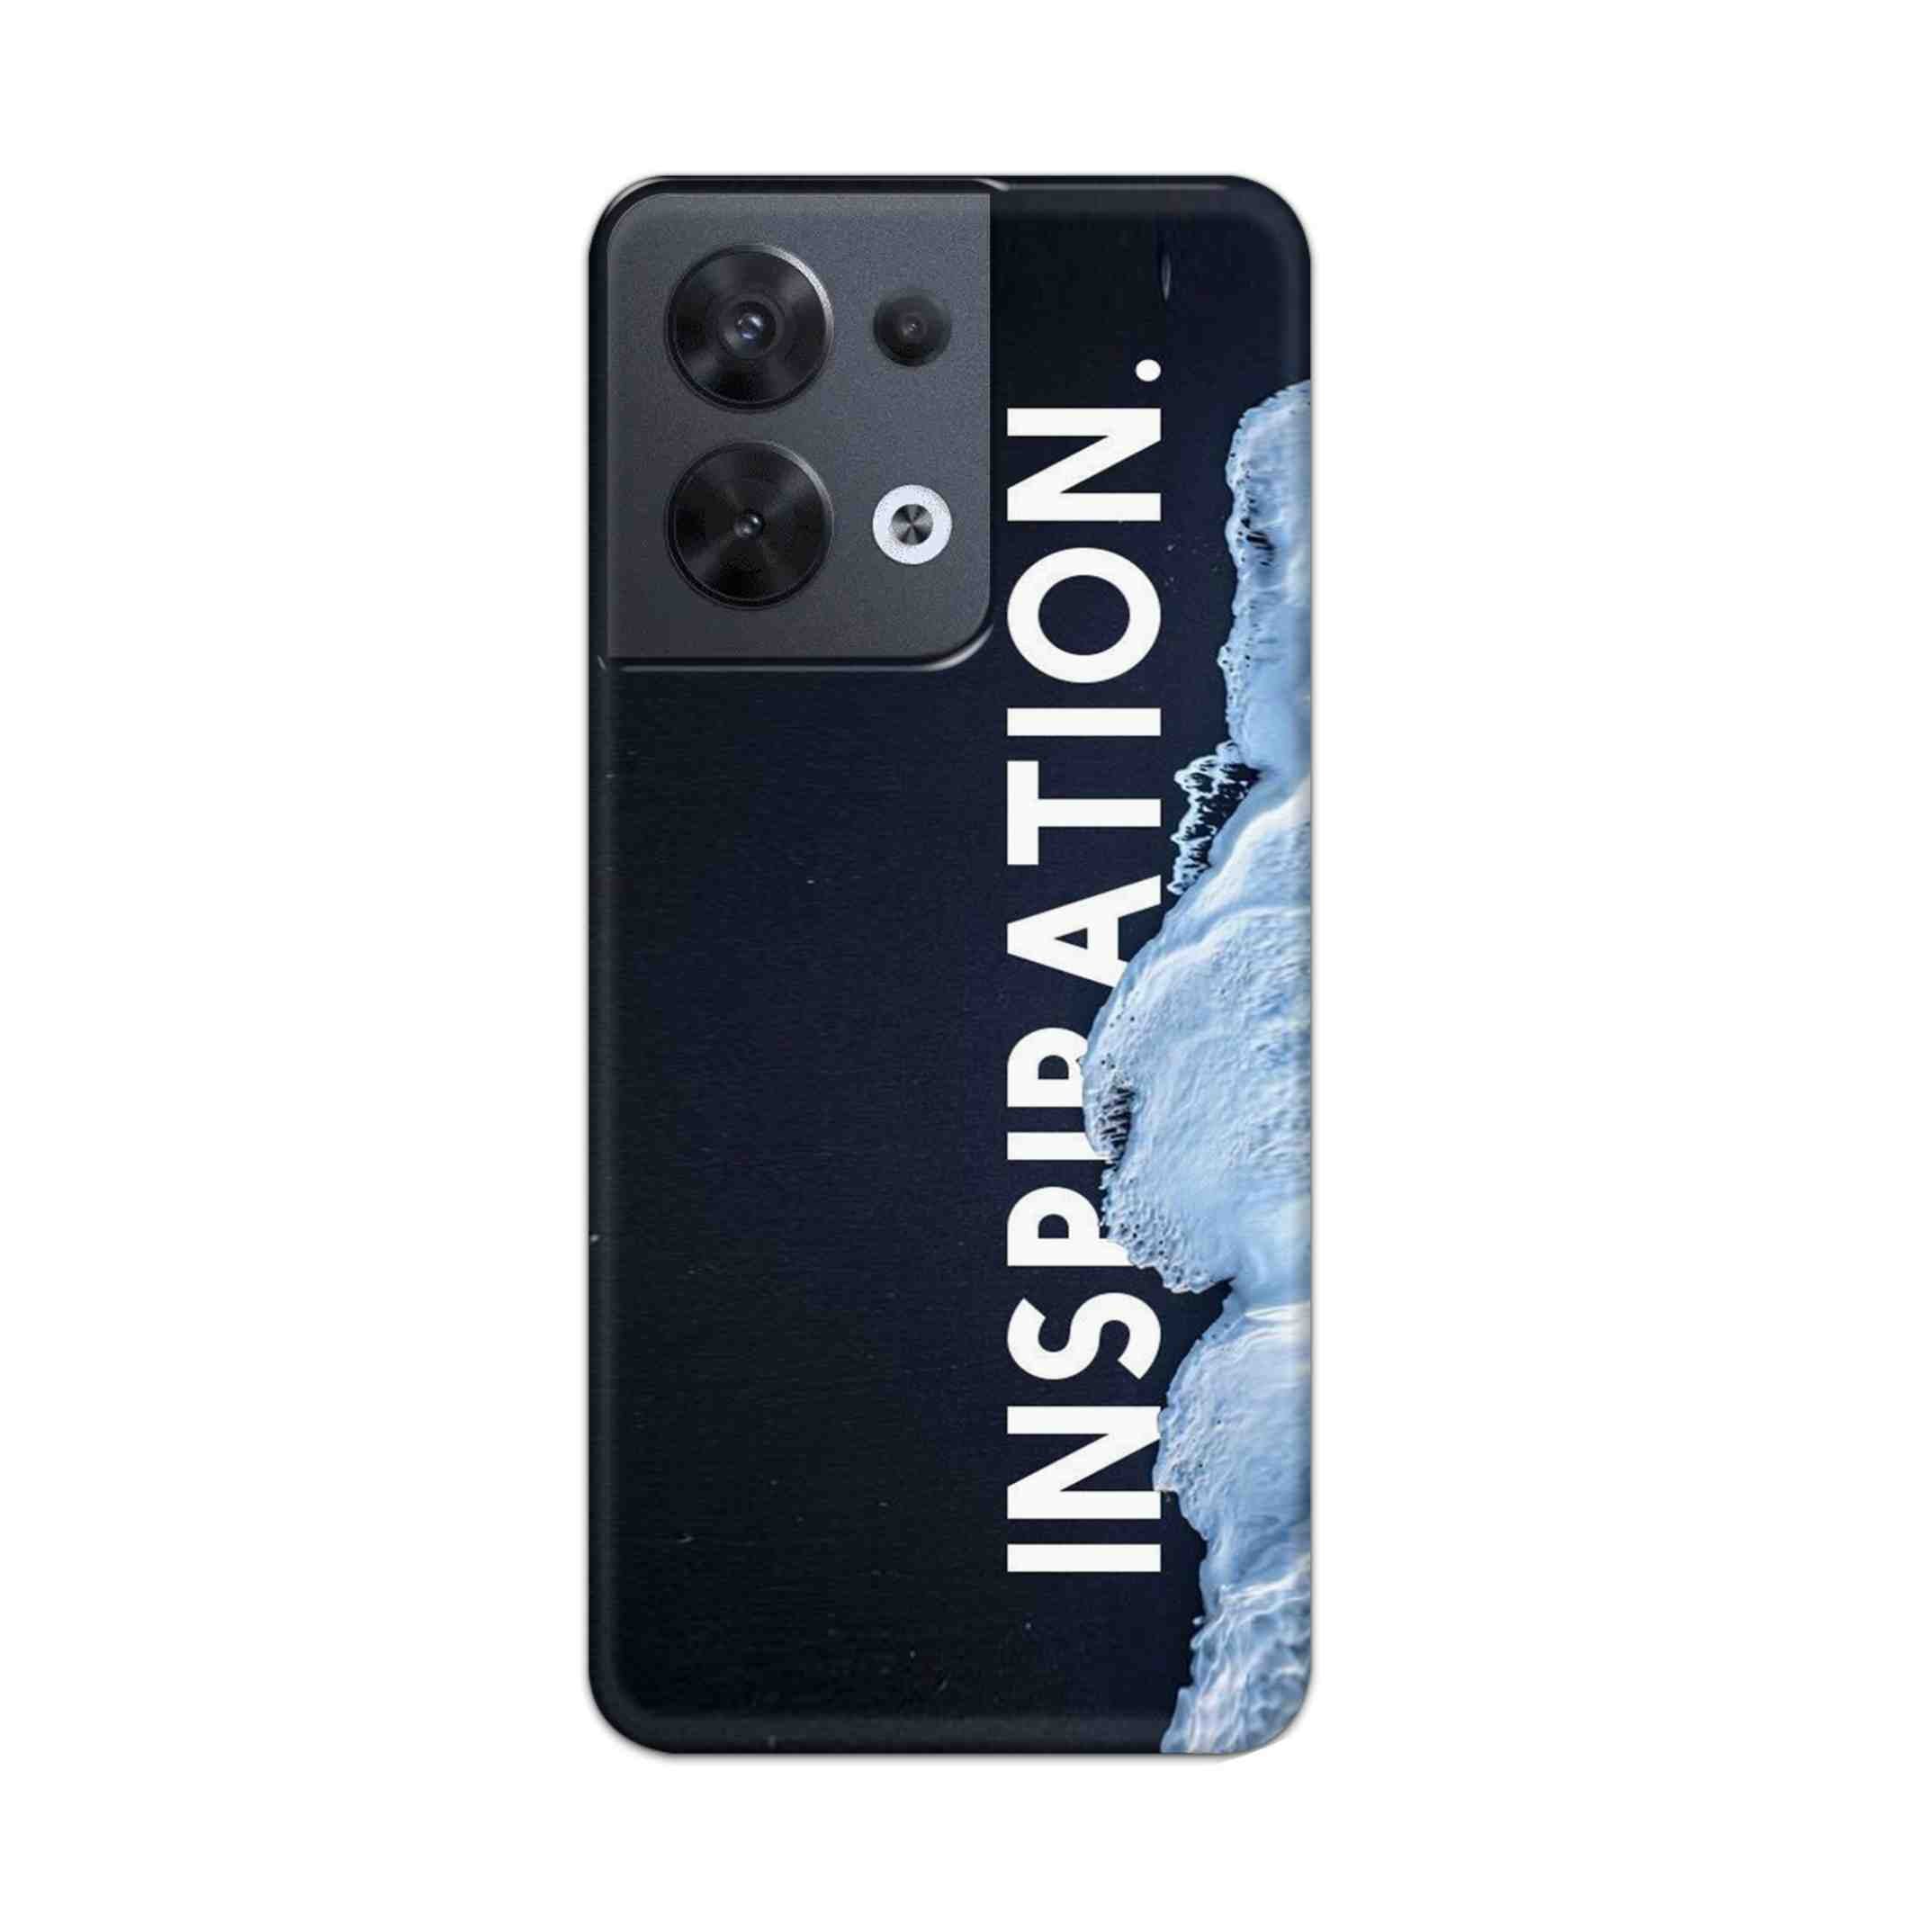 Buy Inspiration Hard Back Mobile Phone Case/Cover For Oppo Reno 8 5G Online